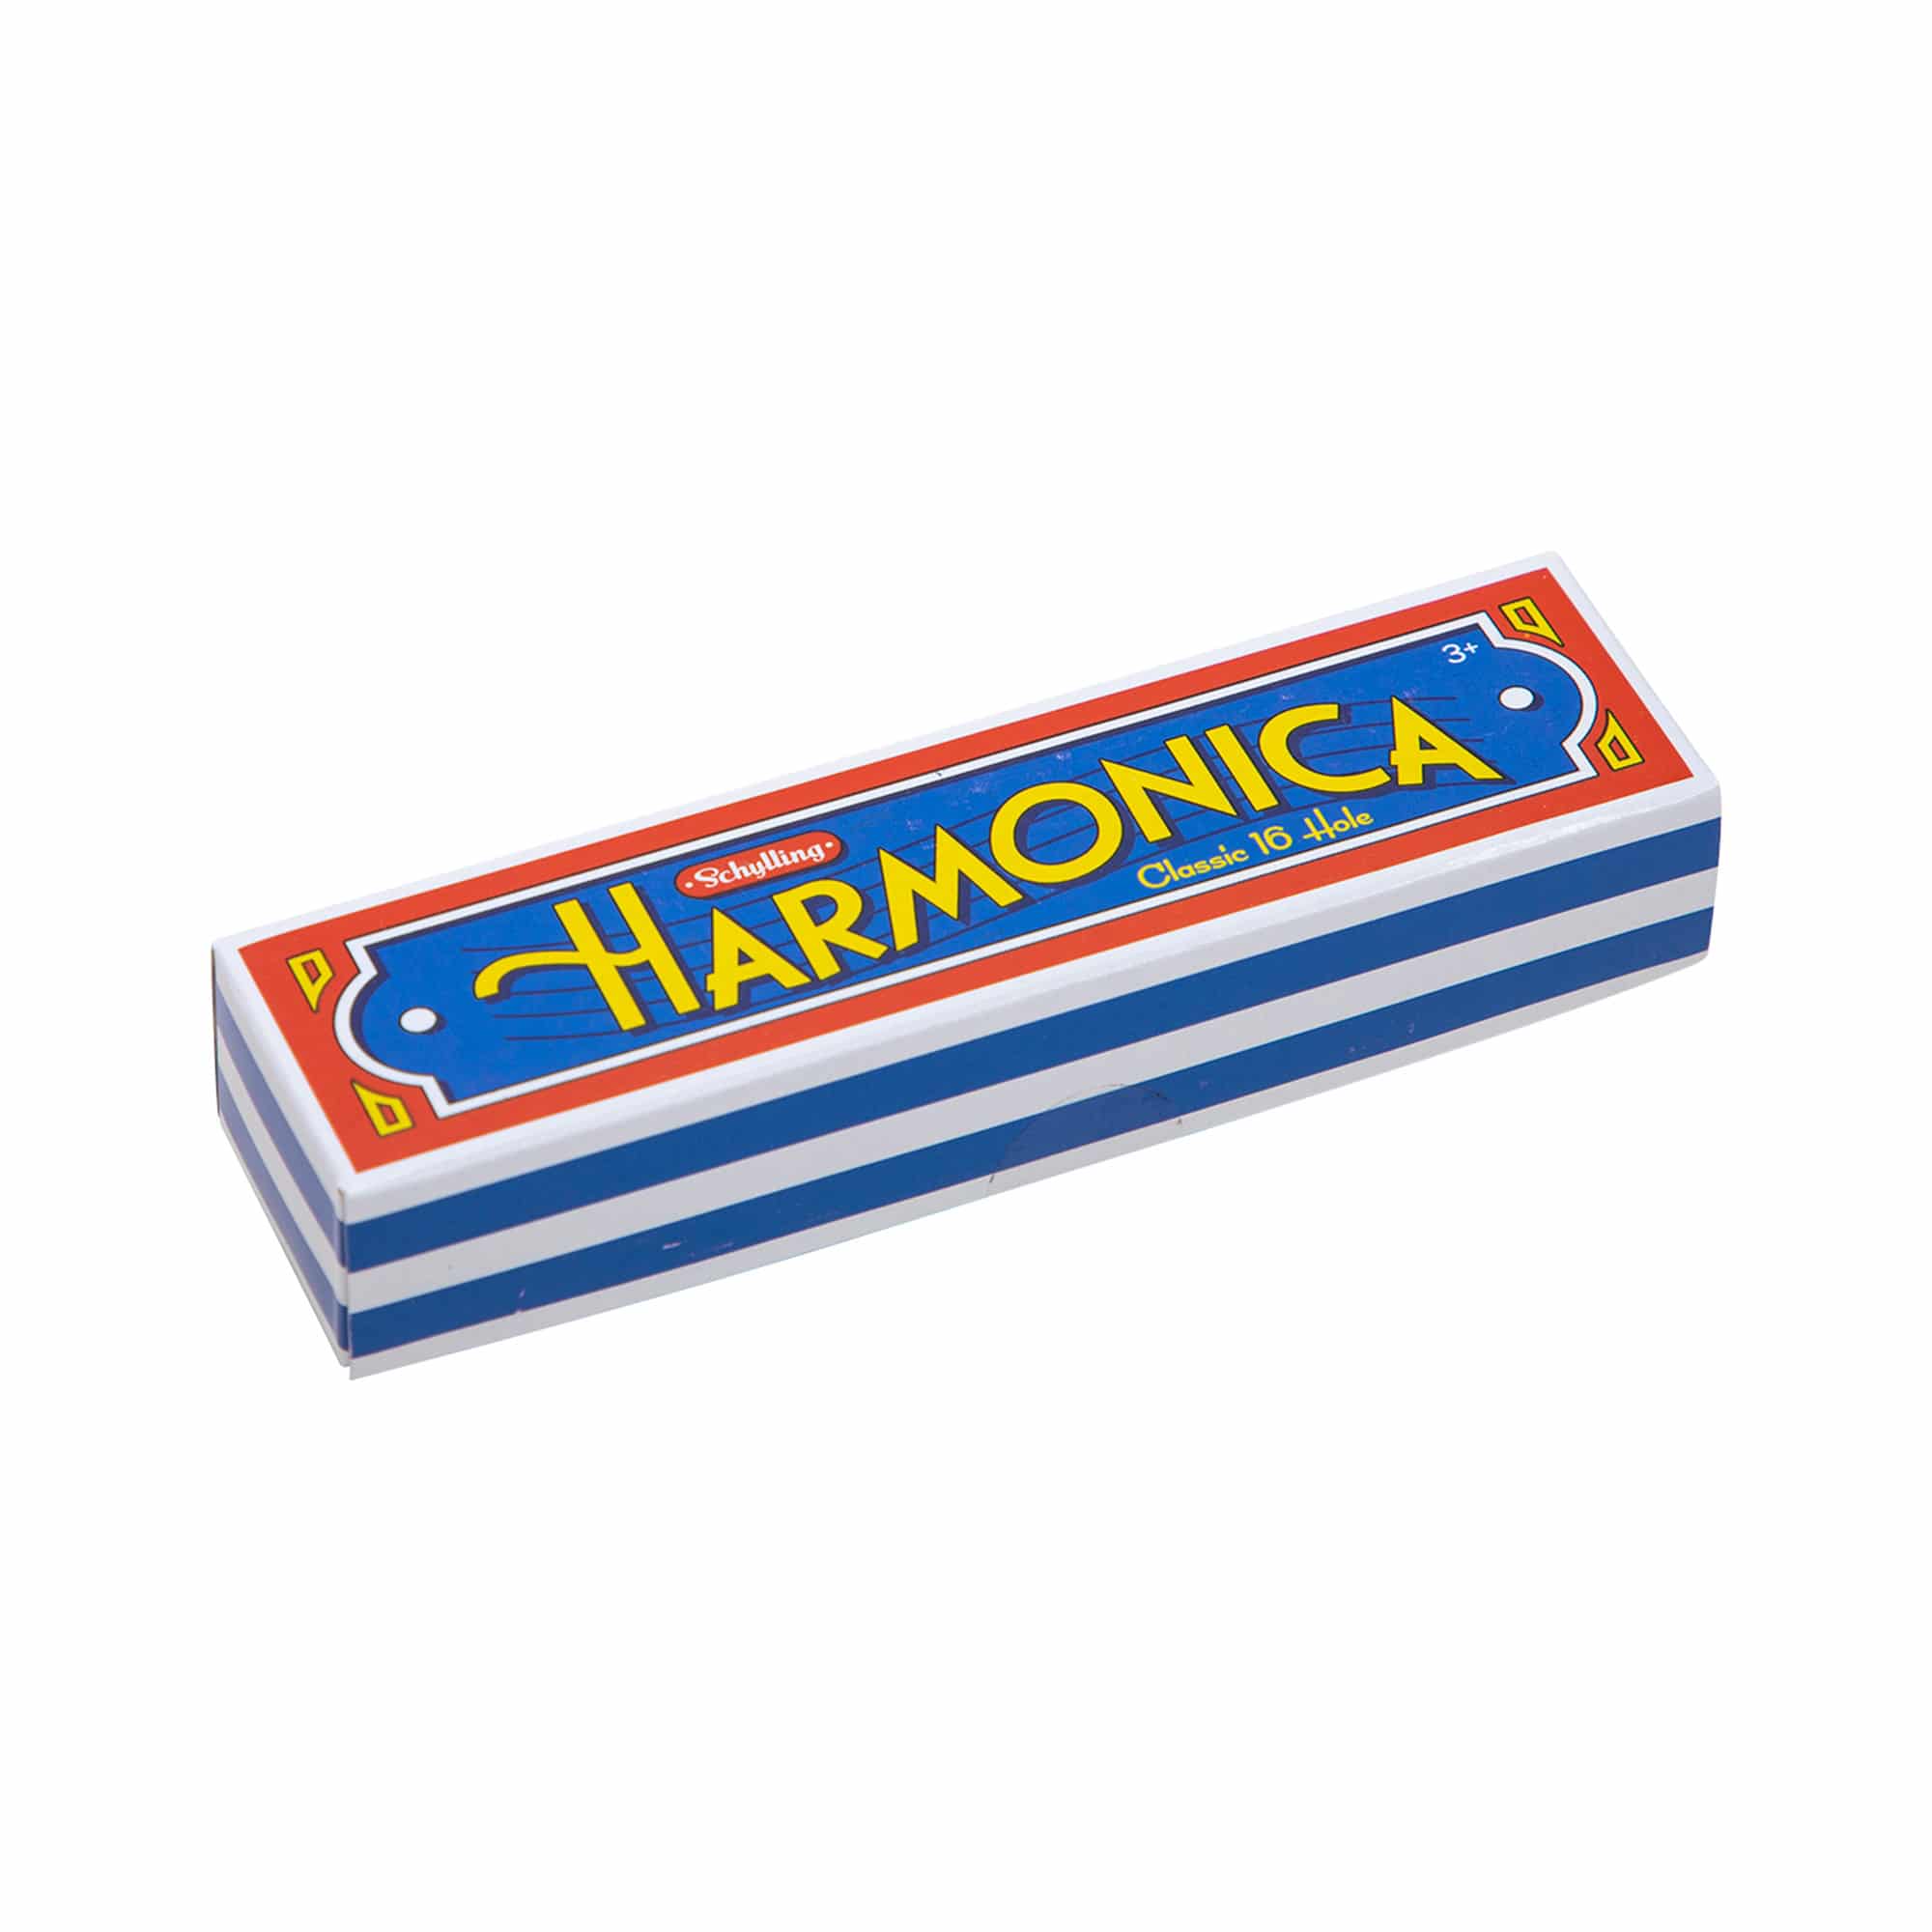 Harmonica - Classic 16 Hole    